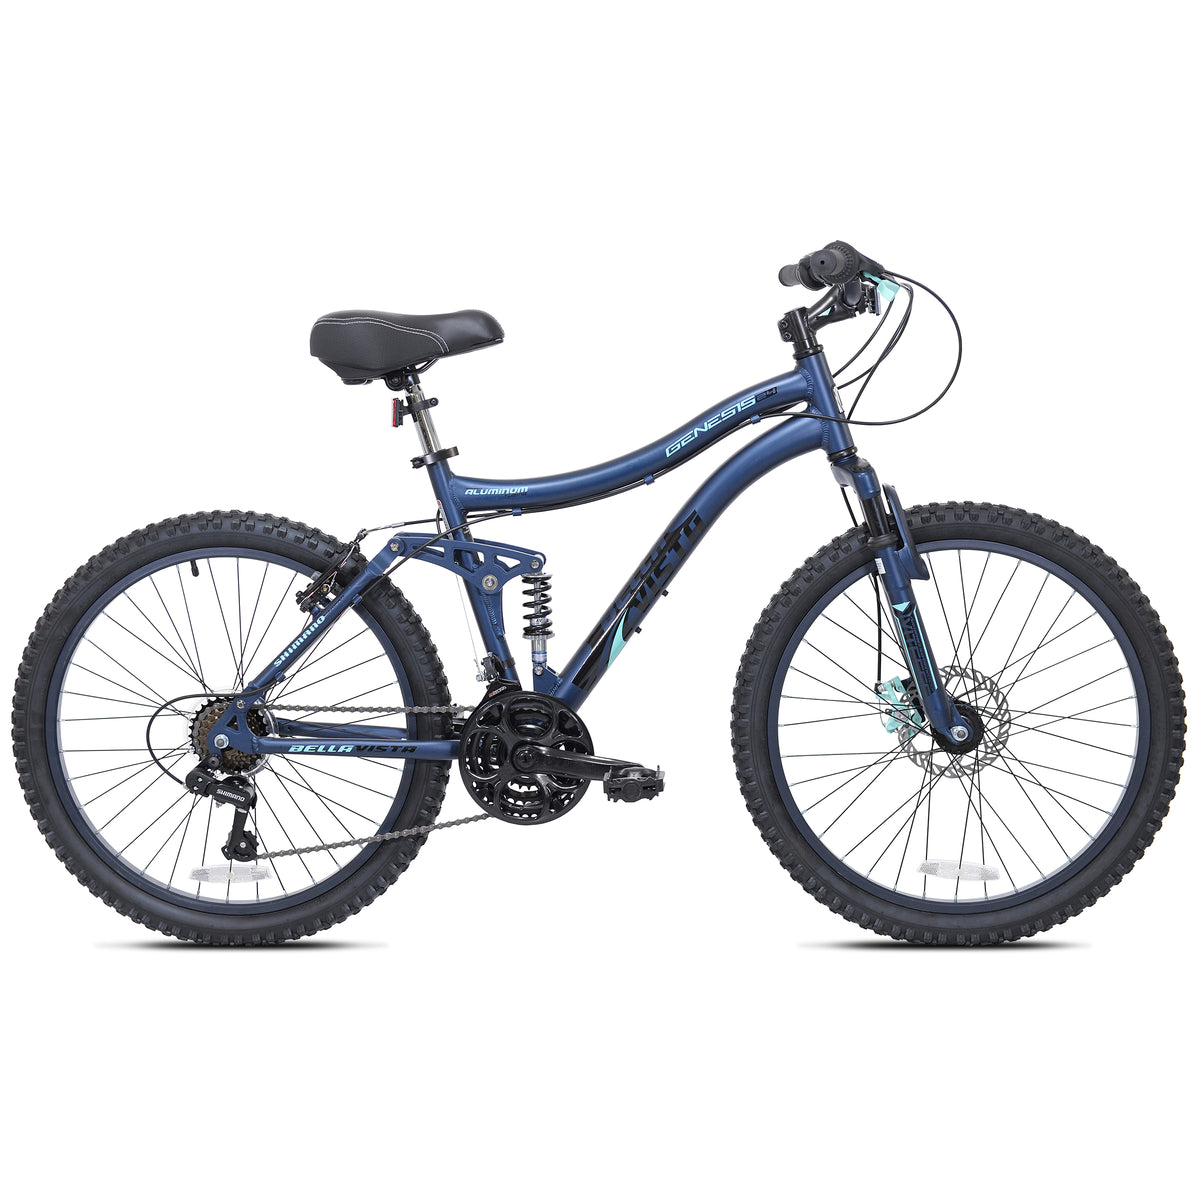 24" Genesis Bella Vista | Mountain Bike for Kids Ages 8+